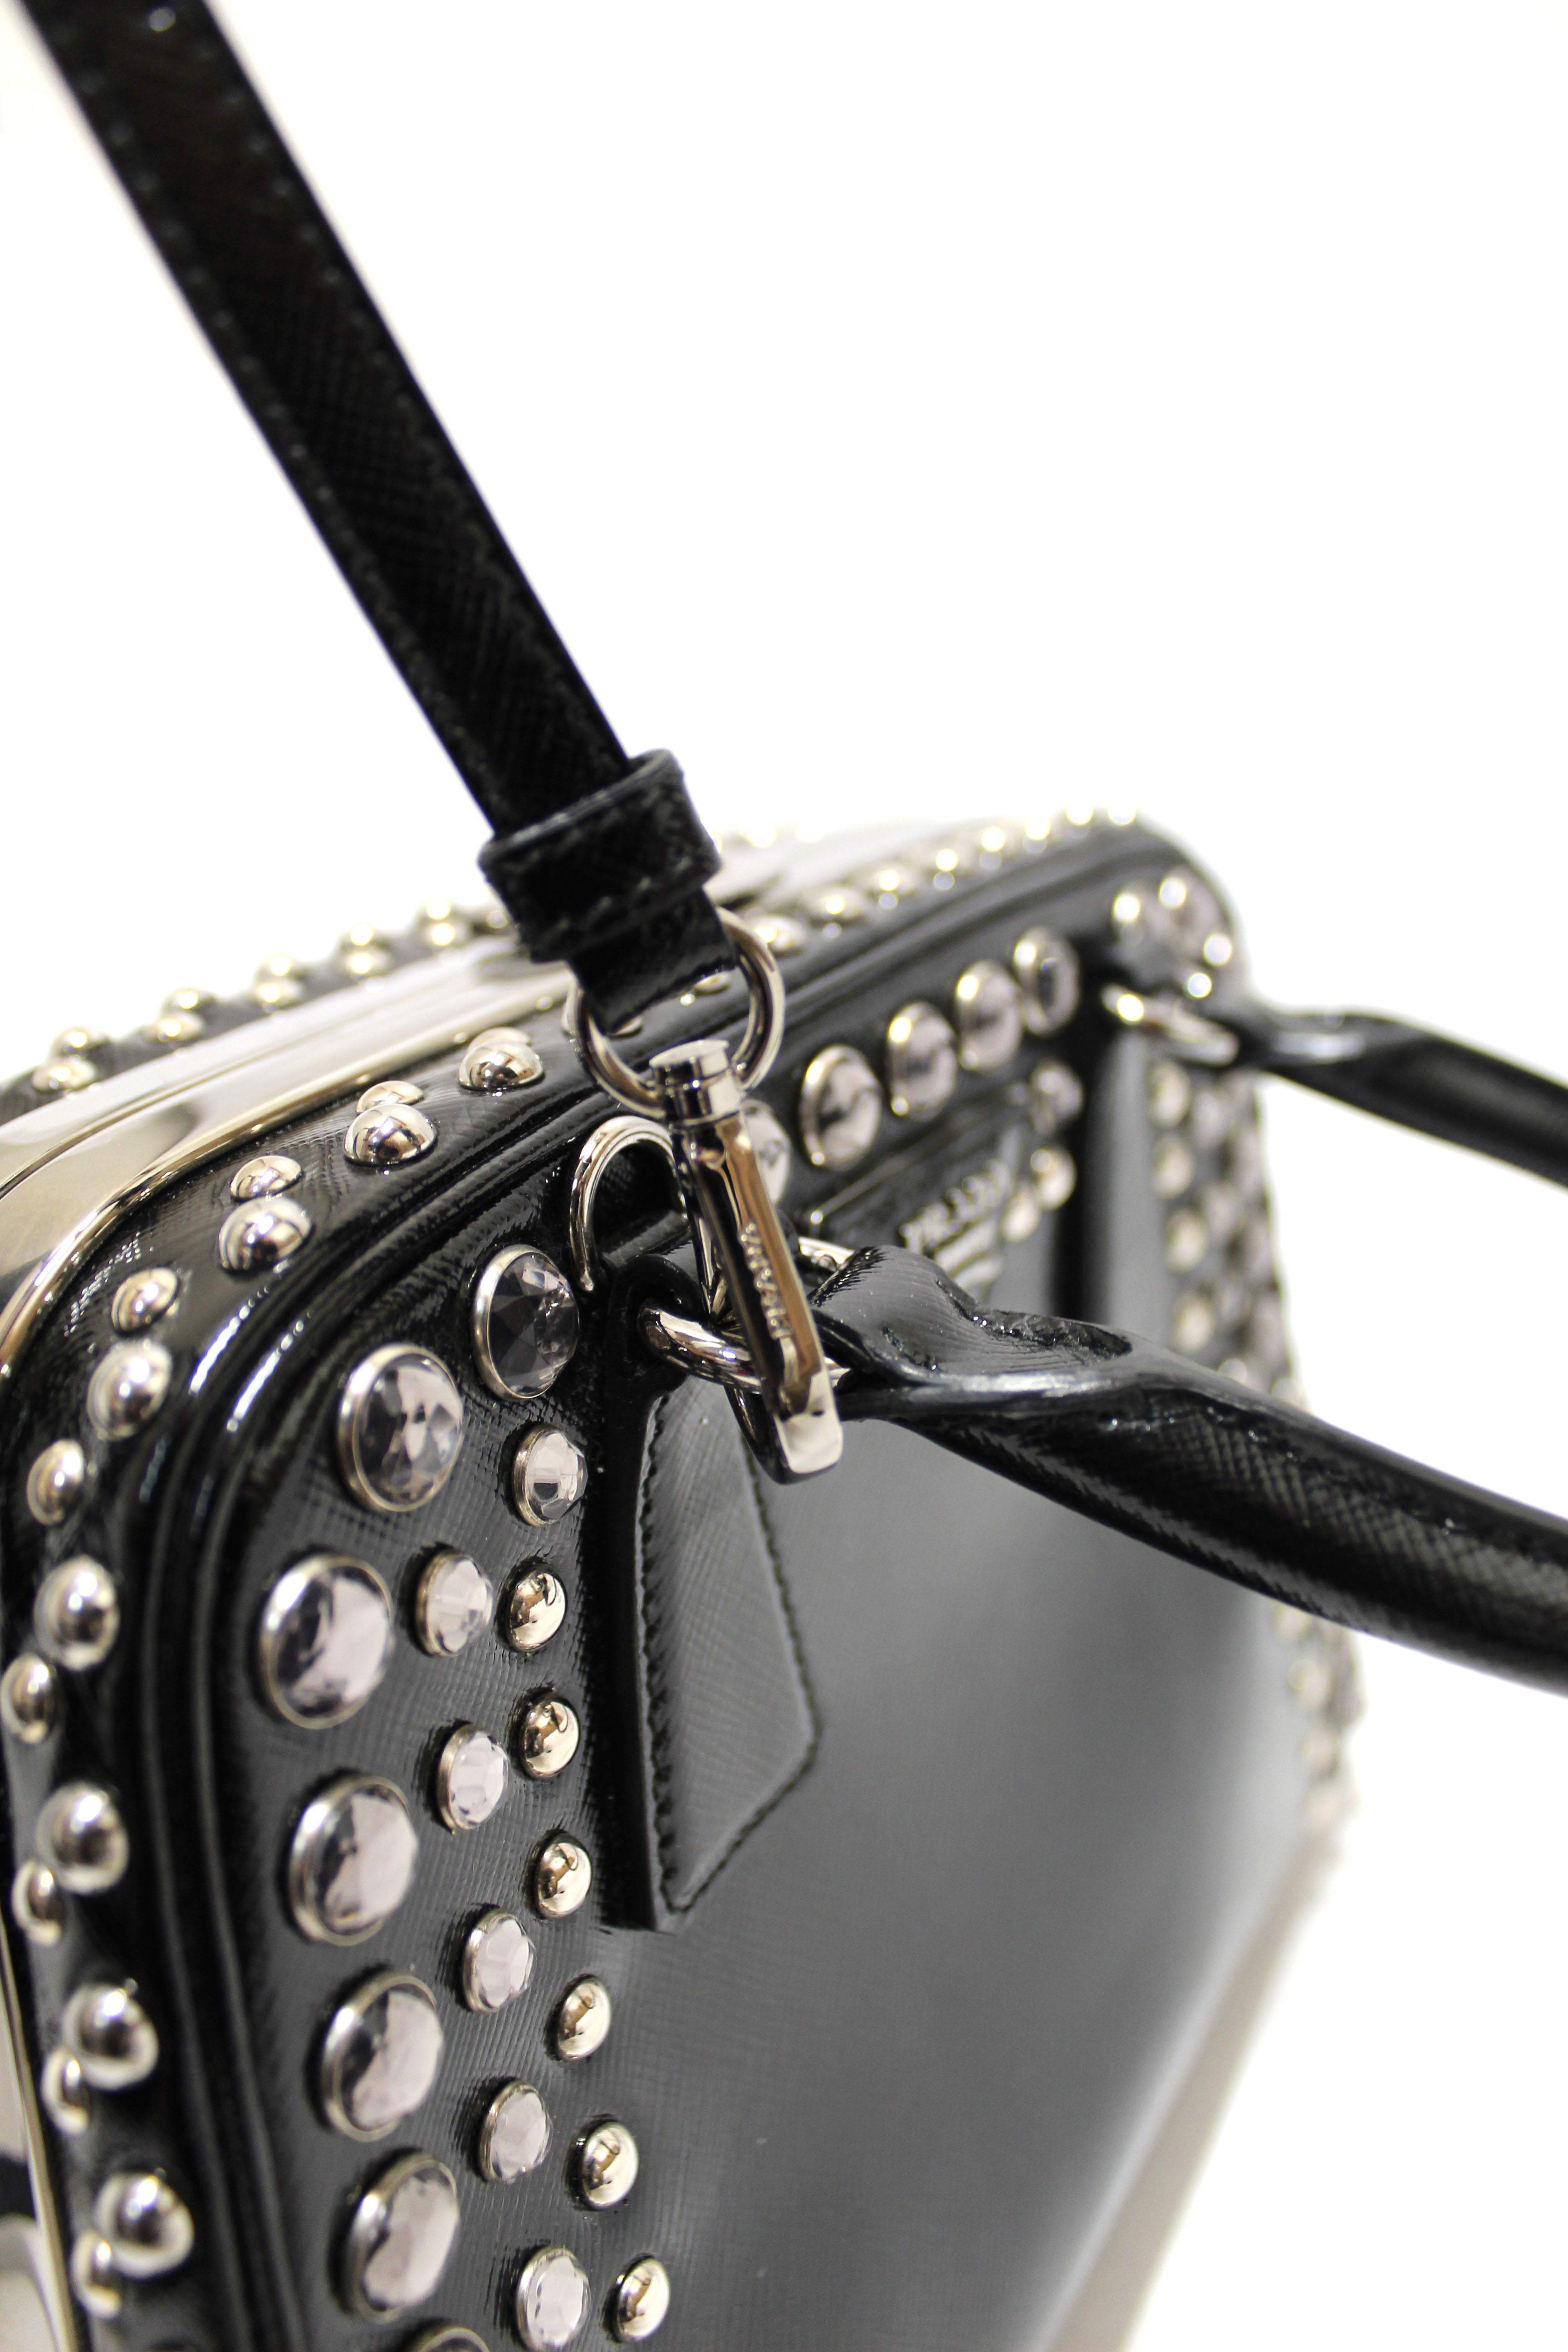 Authentic Prada Black Patent Saffiano Leather Studded Pyramid Bag